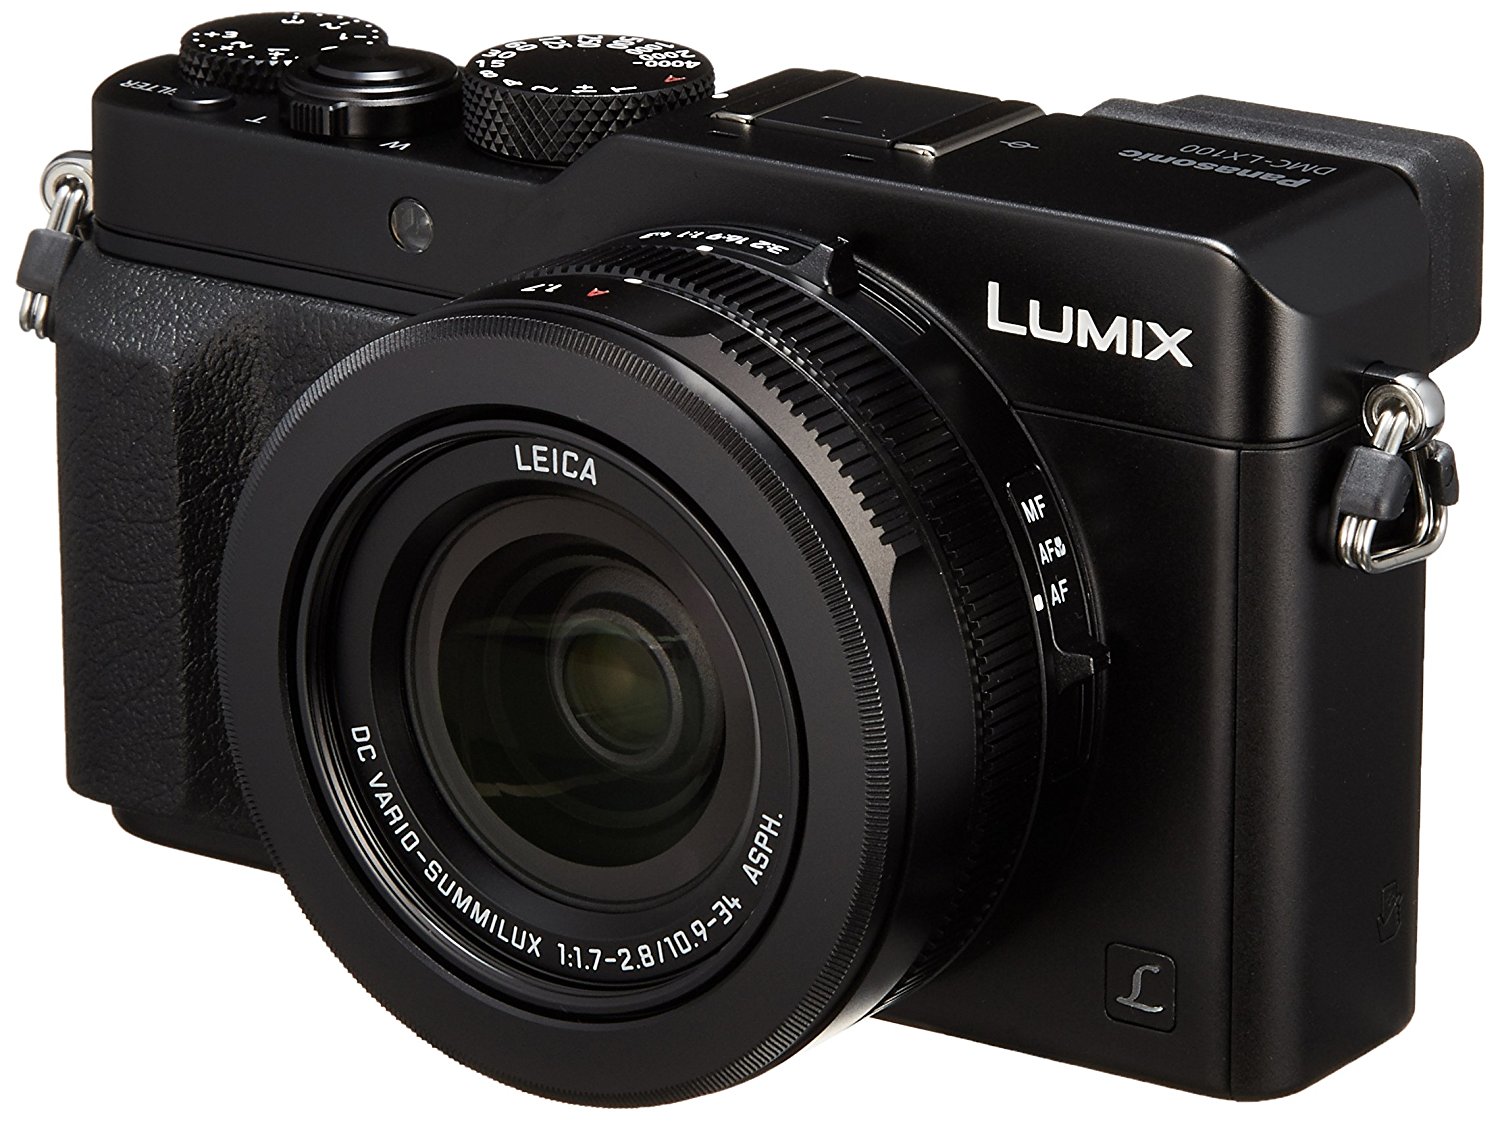 Meet the Panasonic Lumix DMC-LX100: Camera Review & Test